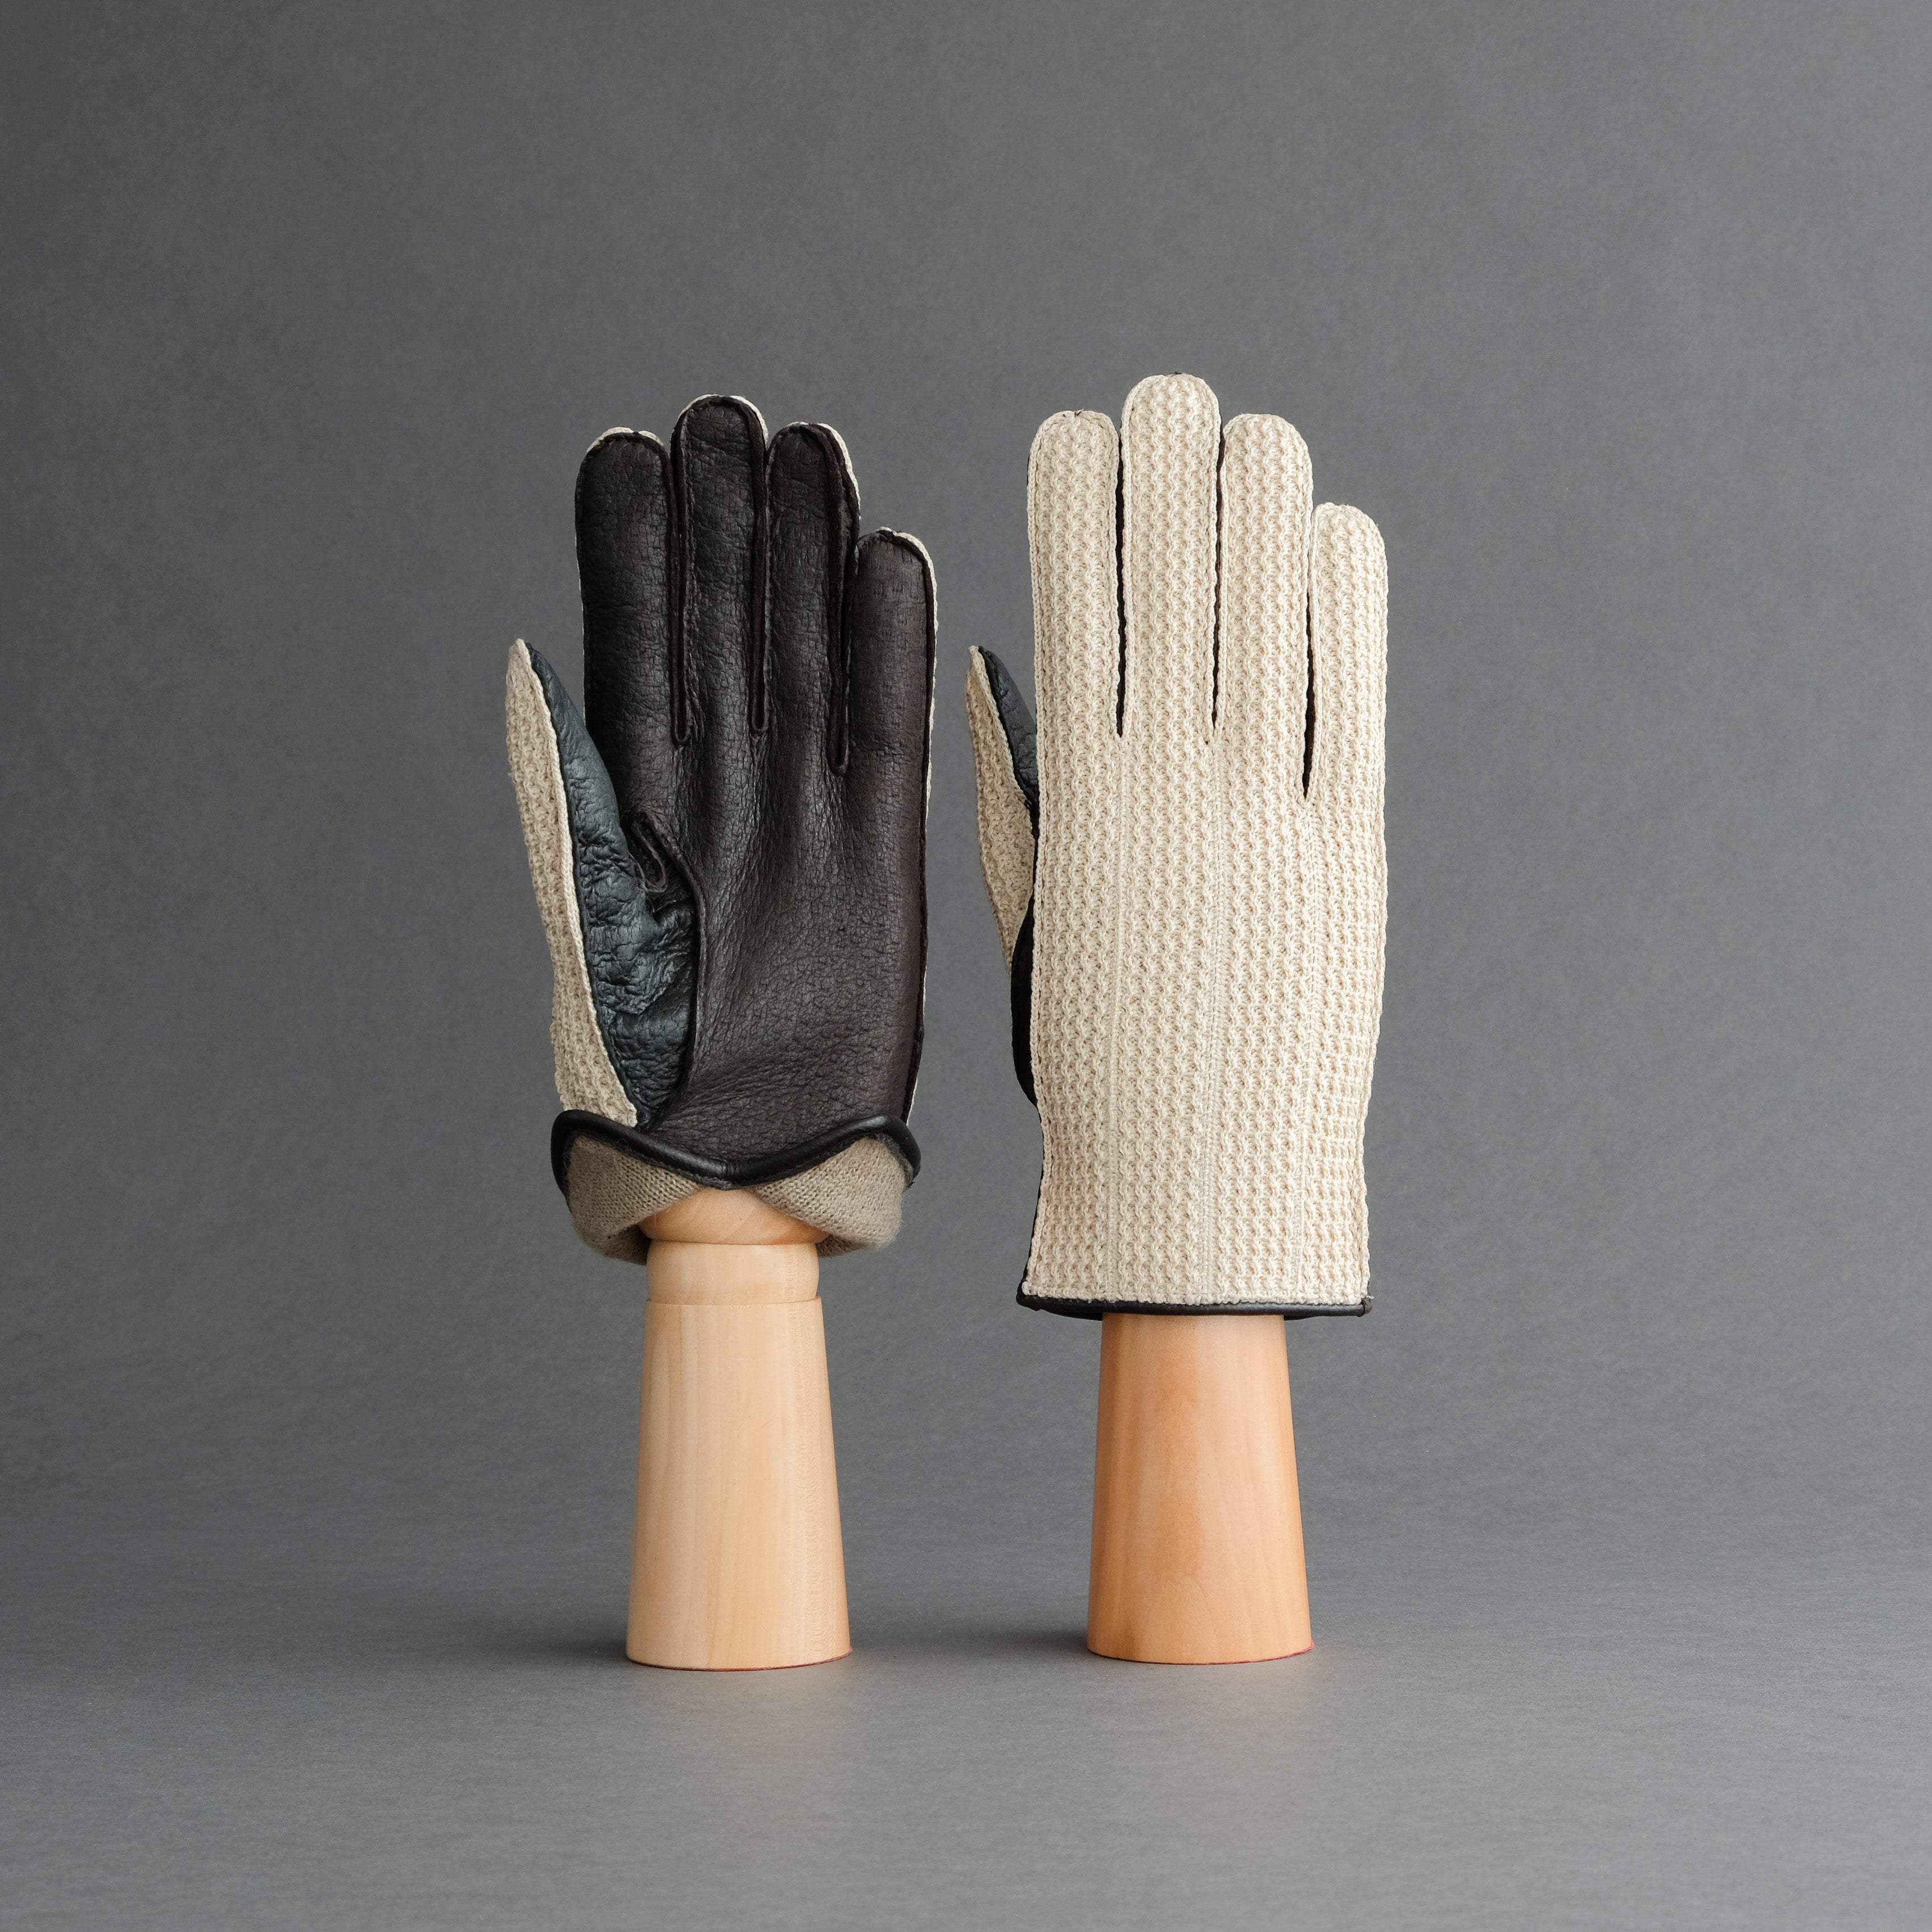 Gentlemen's Gloves from Peccary Leather and Cotton Crochet - TR Handschuhe Wien - Thomas Riemer Handmade Gloves